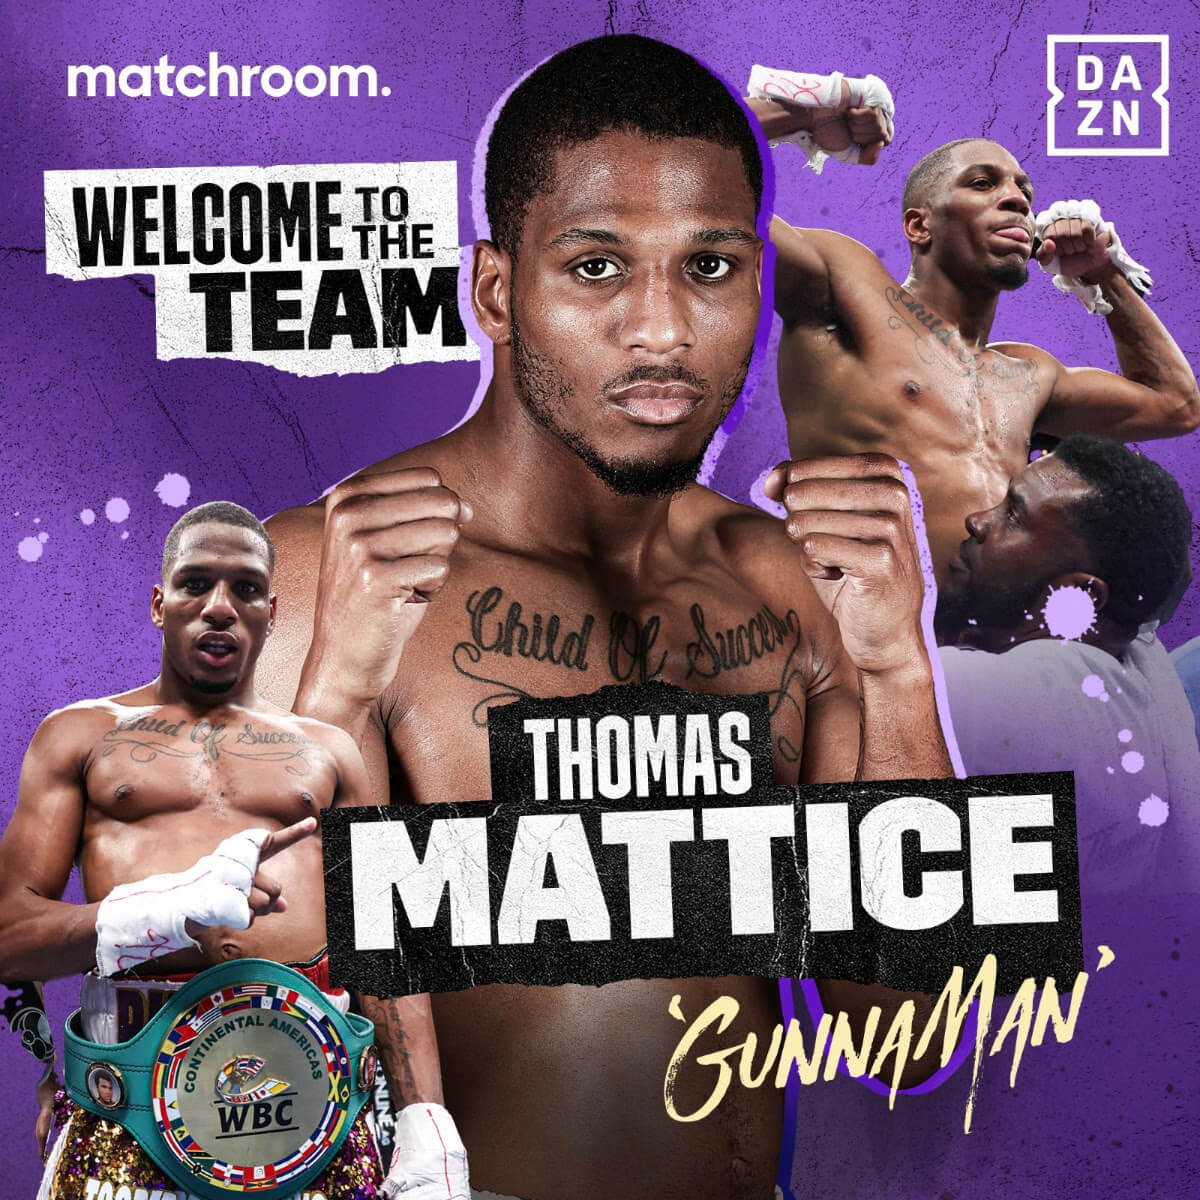 Thomas Mattice Signs With Matchroom